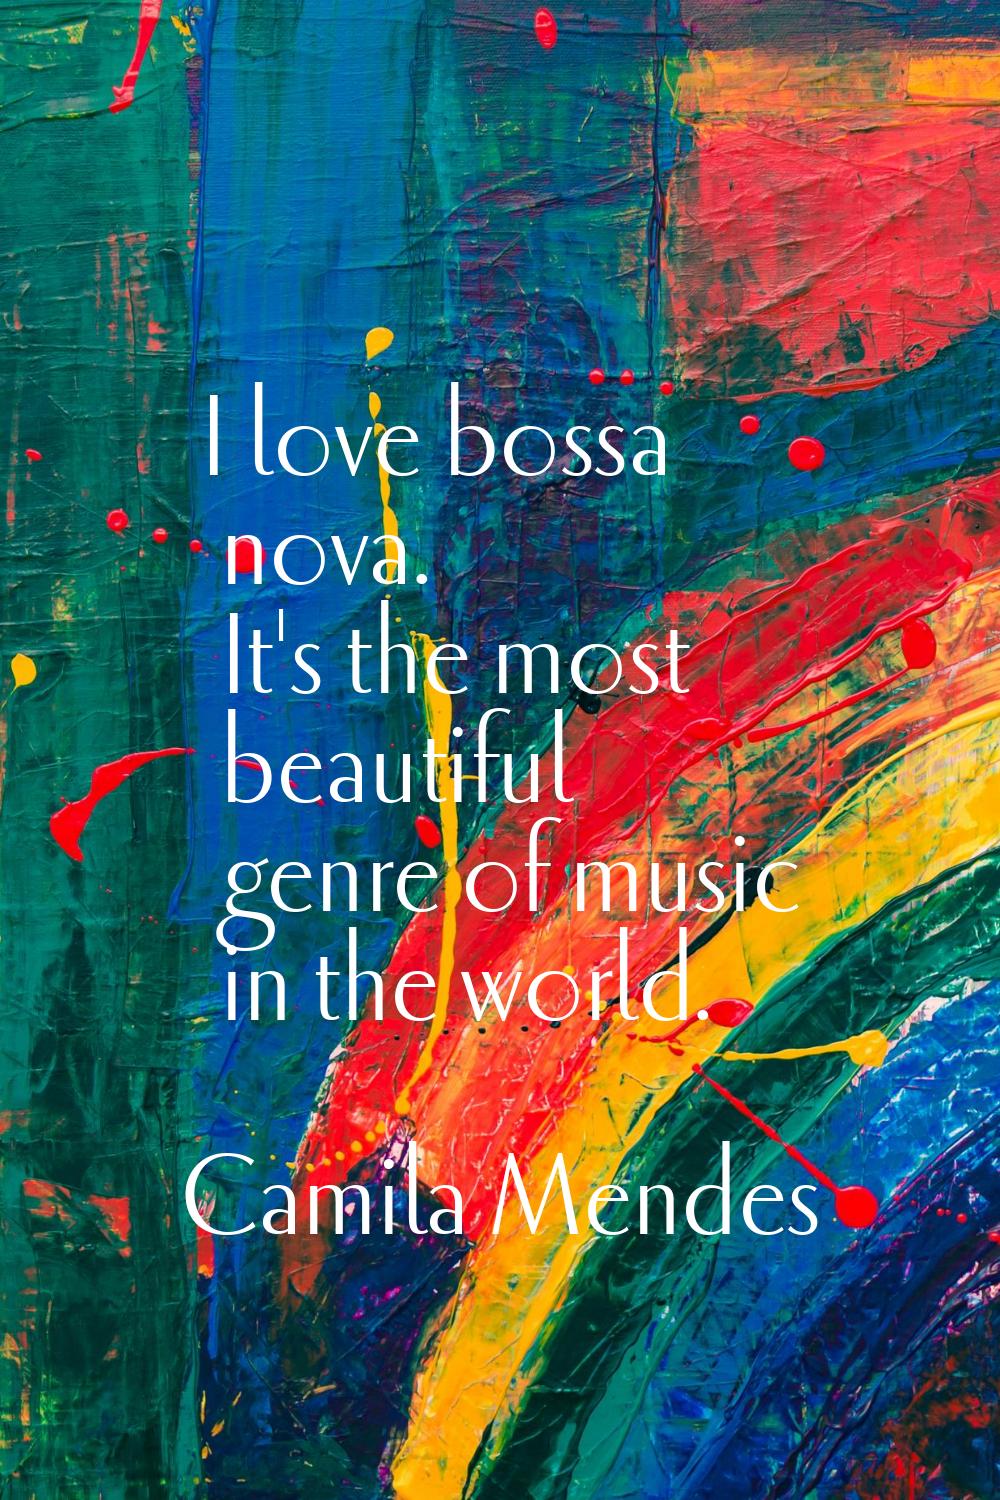 I love bossa nova. It's the most beautiful genre of music in the world.